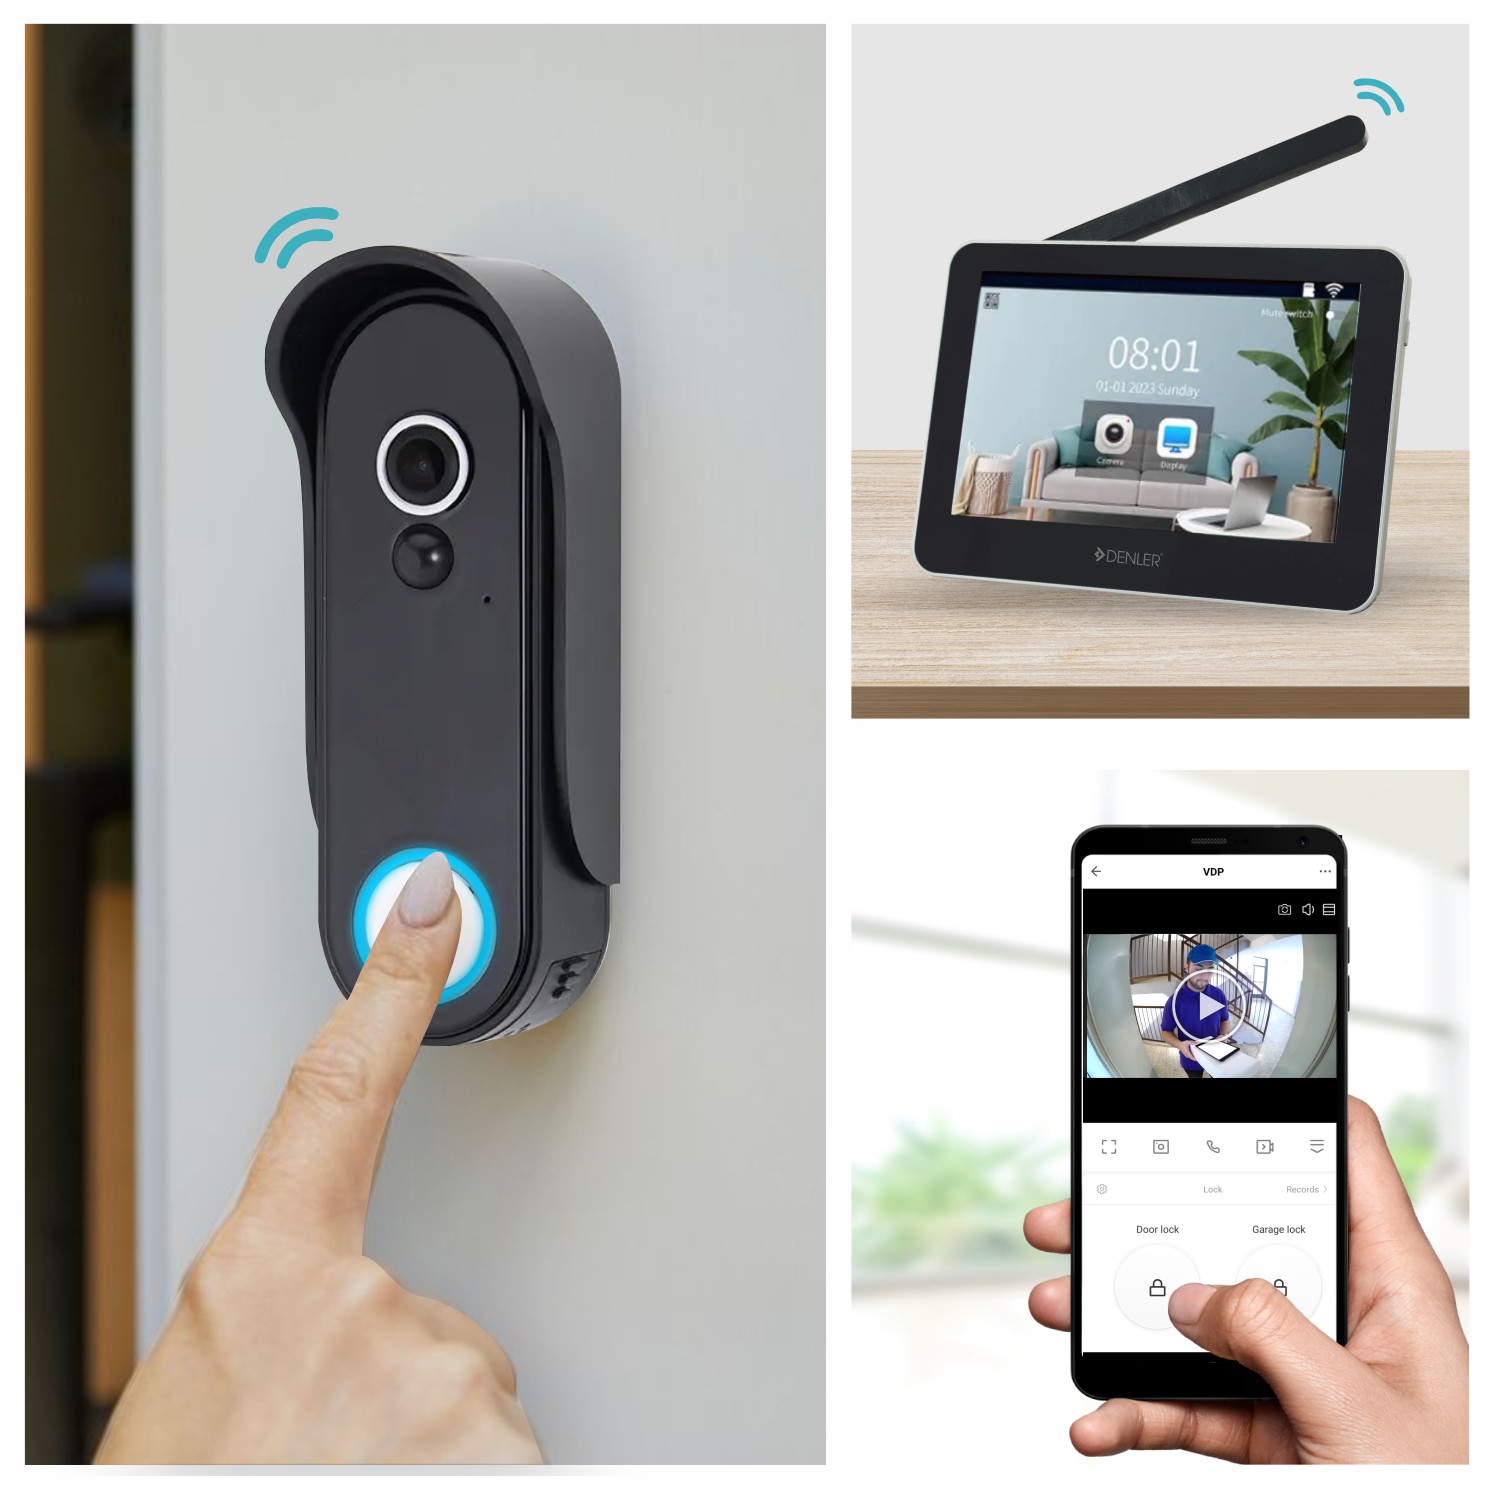 What App Does Smart Wireless Wifi Video Doorbell Use